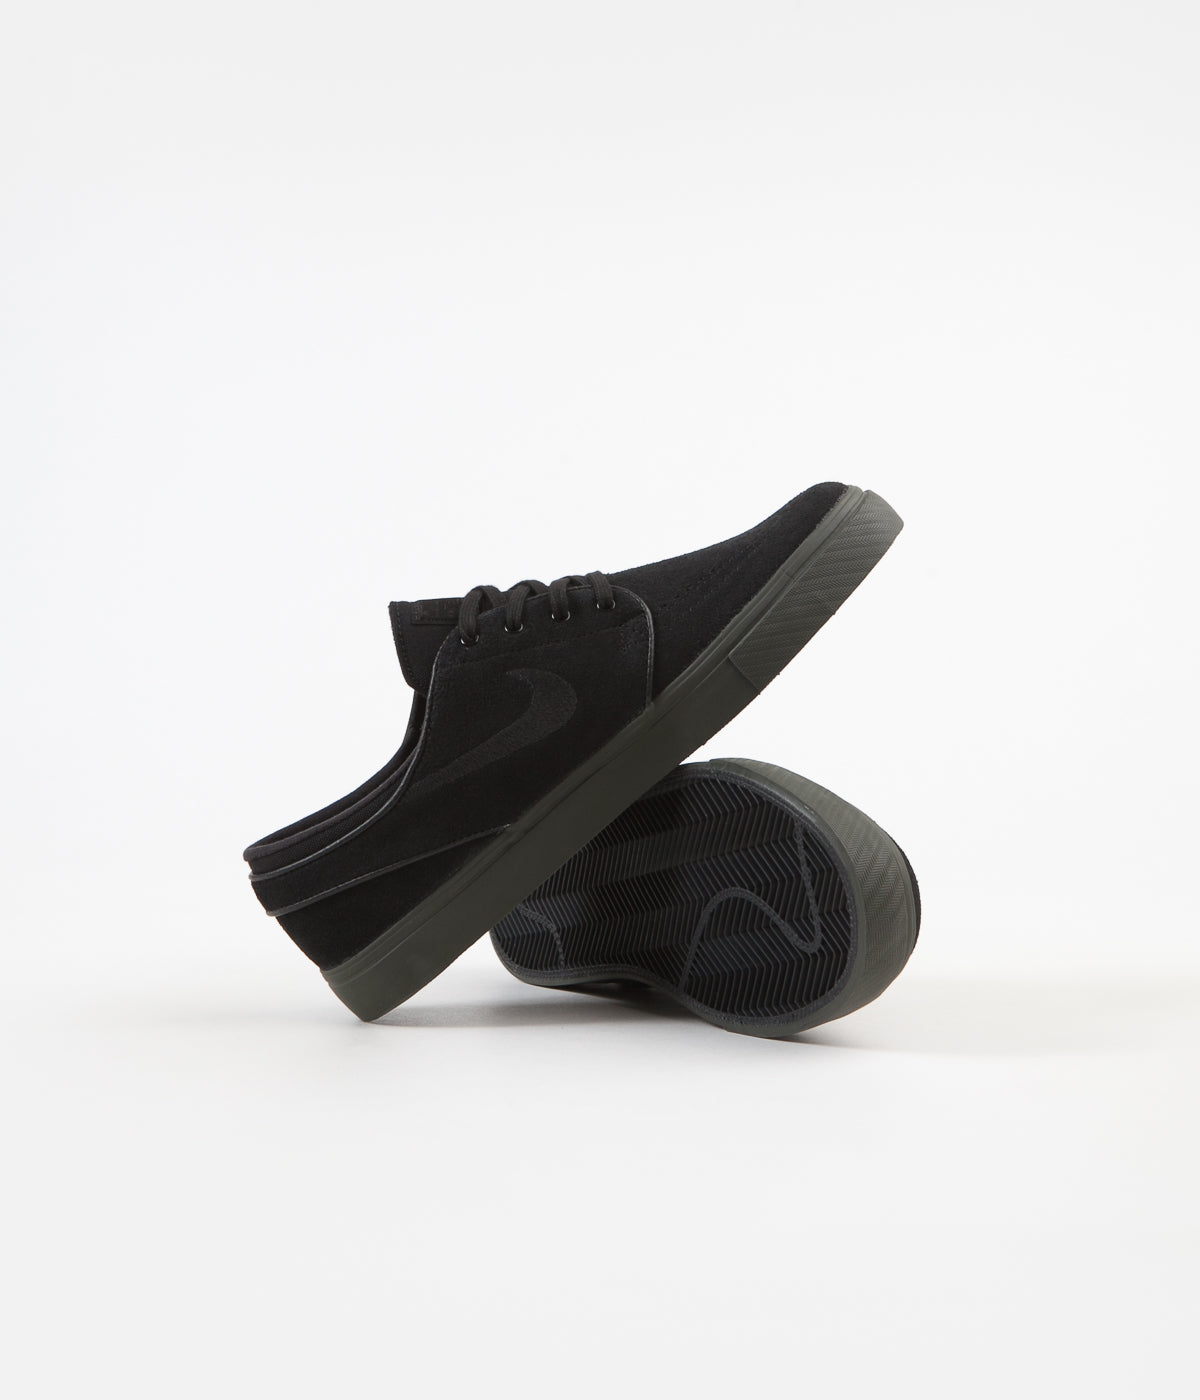 Vroegst Trots Streng Nike SB Stefan Janoski Shoes - Black / Black - Sequoia | Flatspot